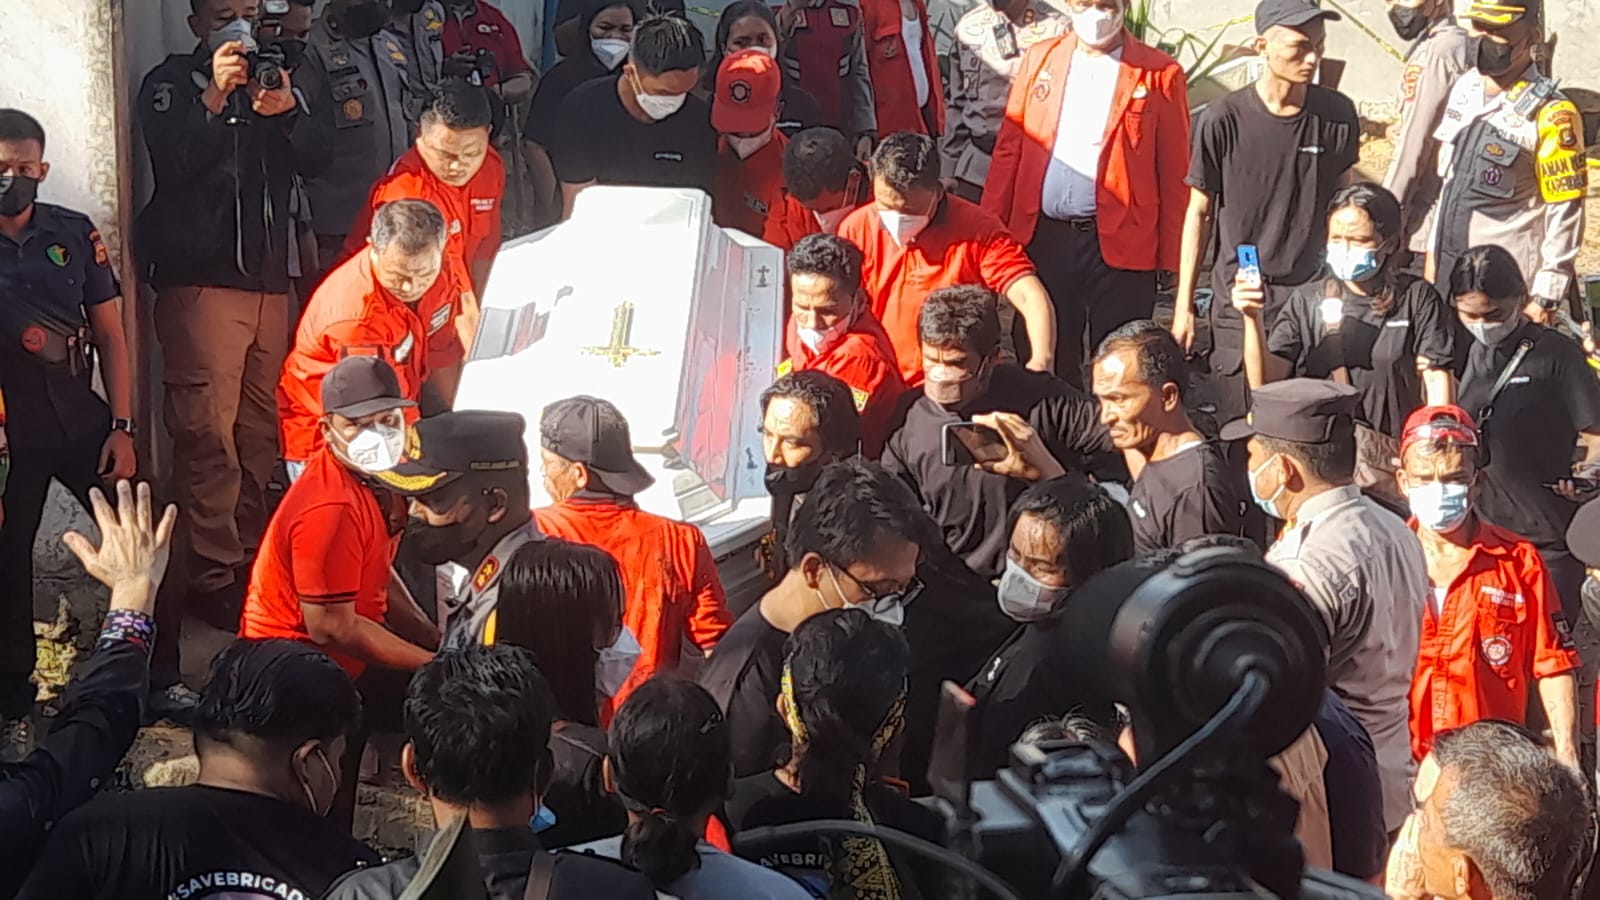 Sampel Tubuh Brigadir J Dibawa ke Jakarta, Kenapa? Simak Alasannya di Sini